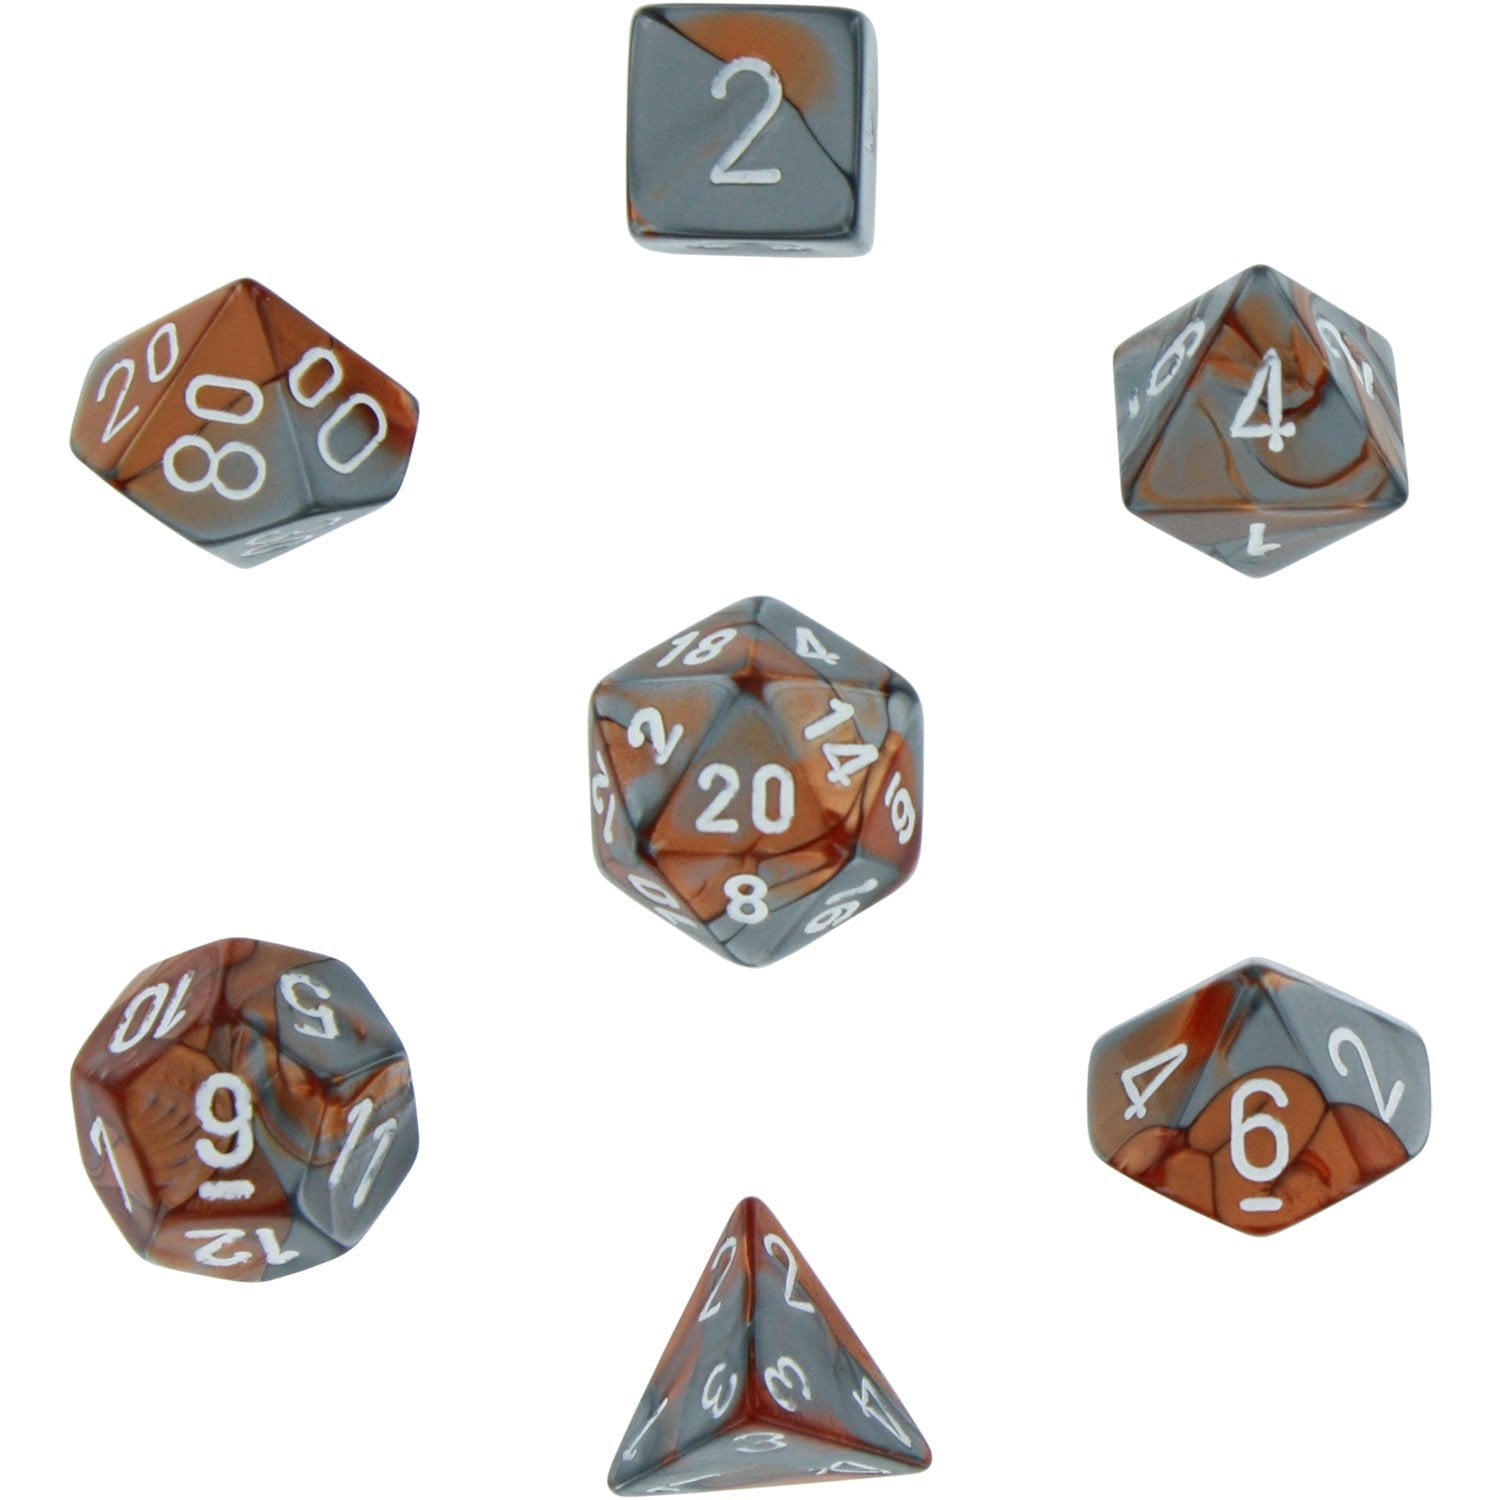 CHX26424 Gemini Copper-Steel/white 7 die set | Grognard Games